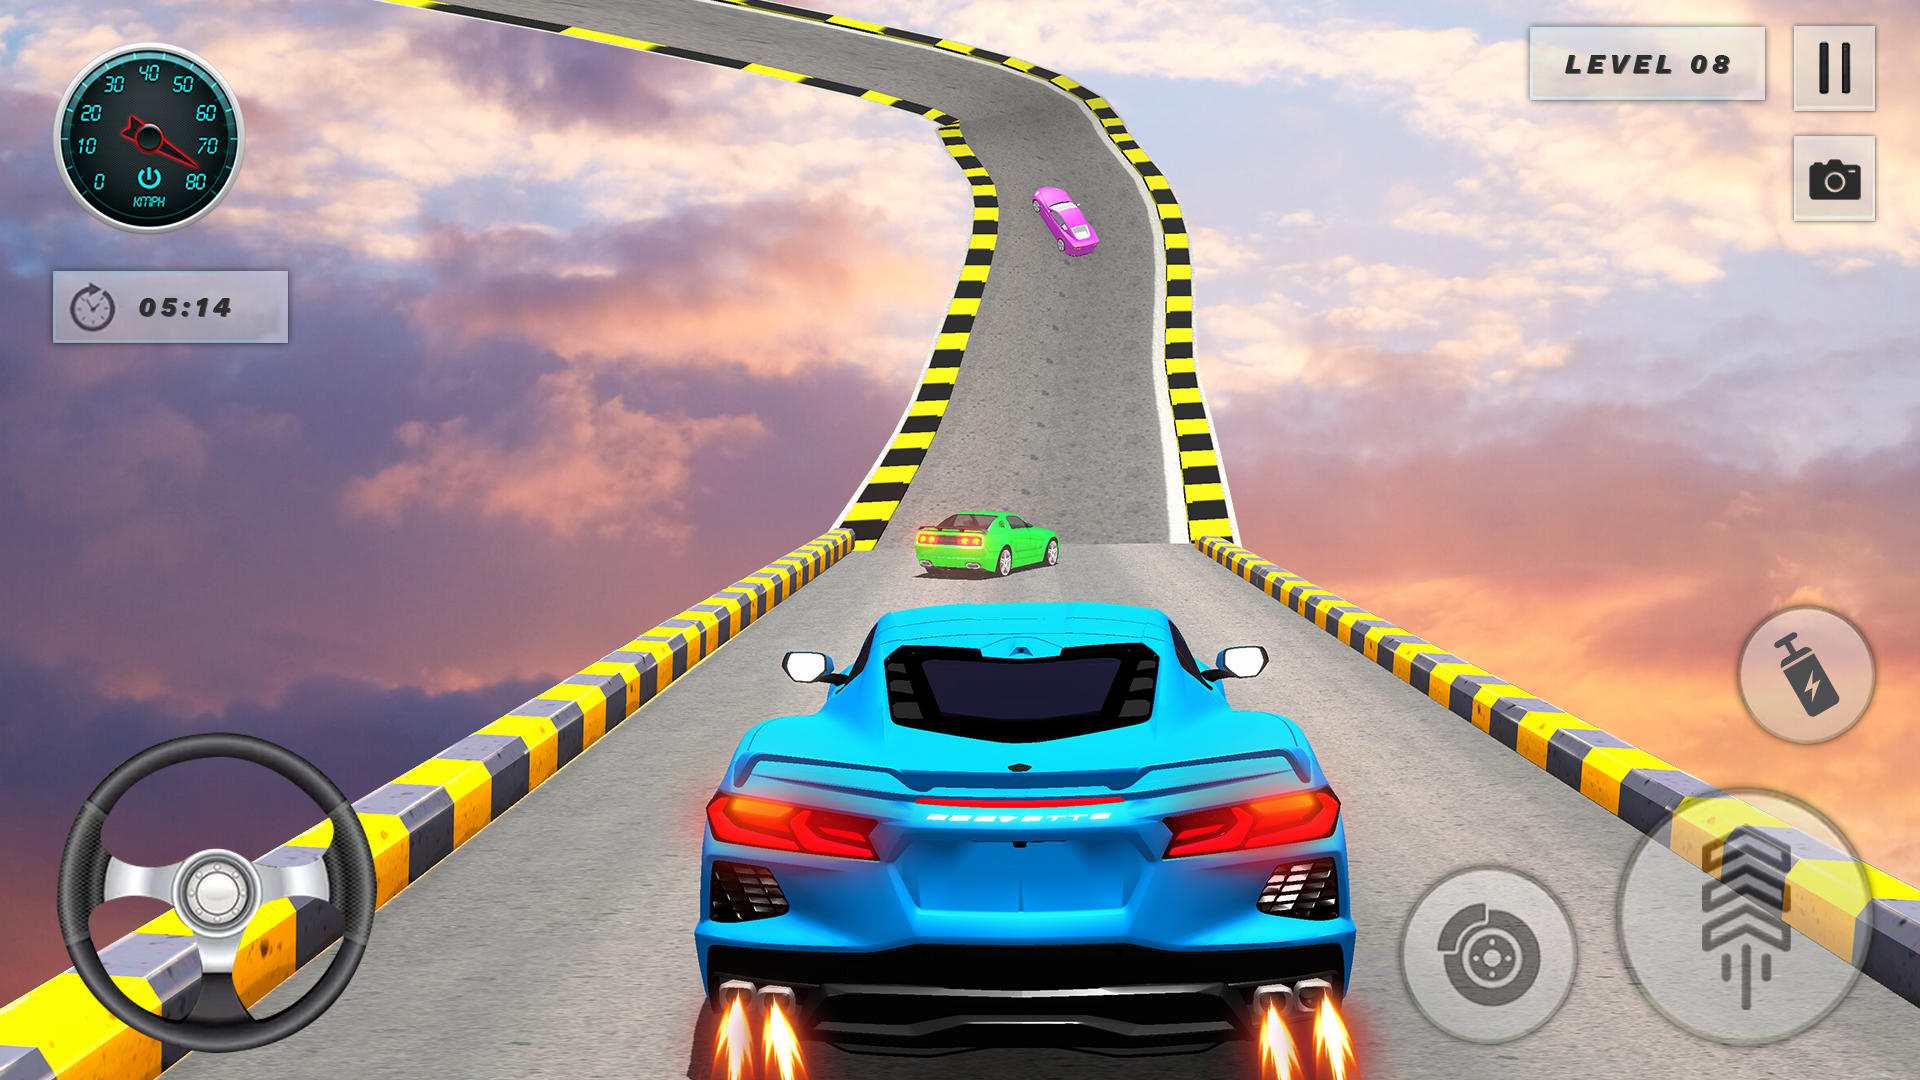 Crazy Crash Car Driving Sim 3D android iOS apk download for free